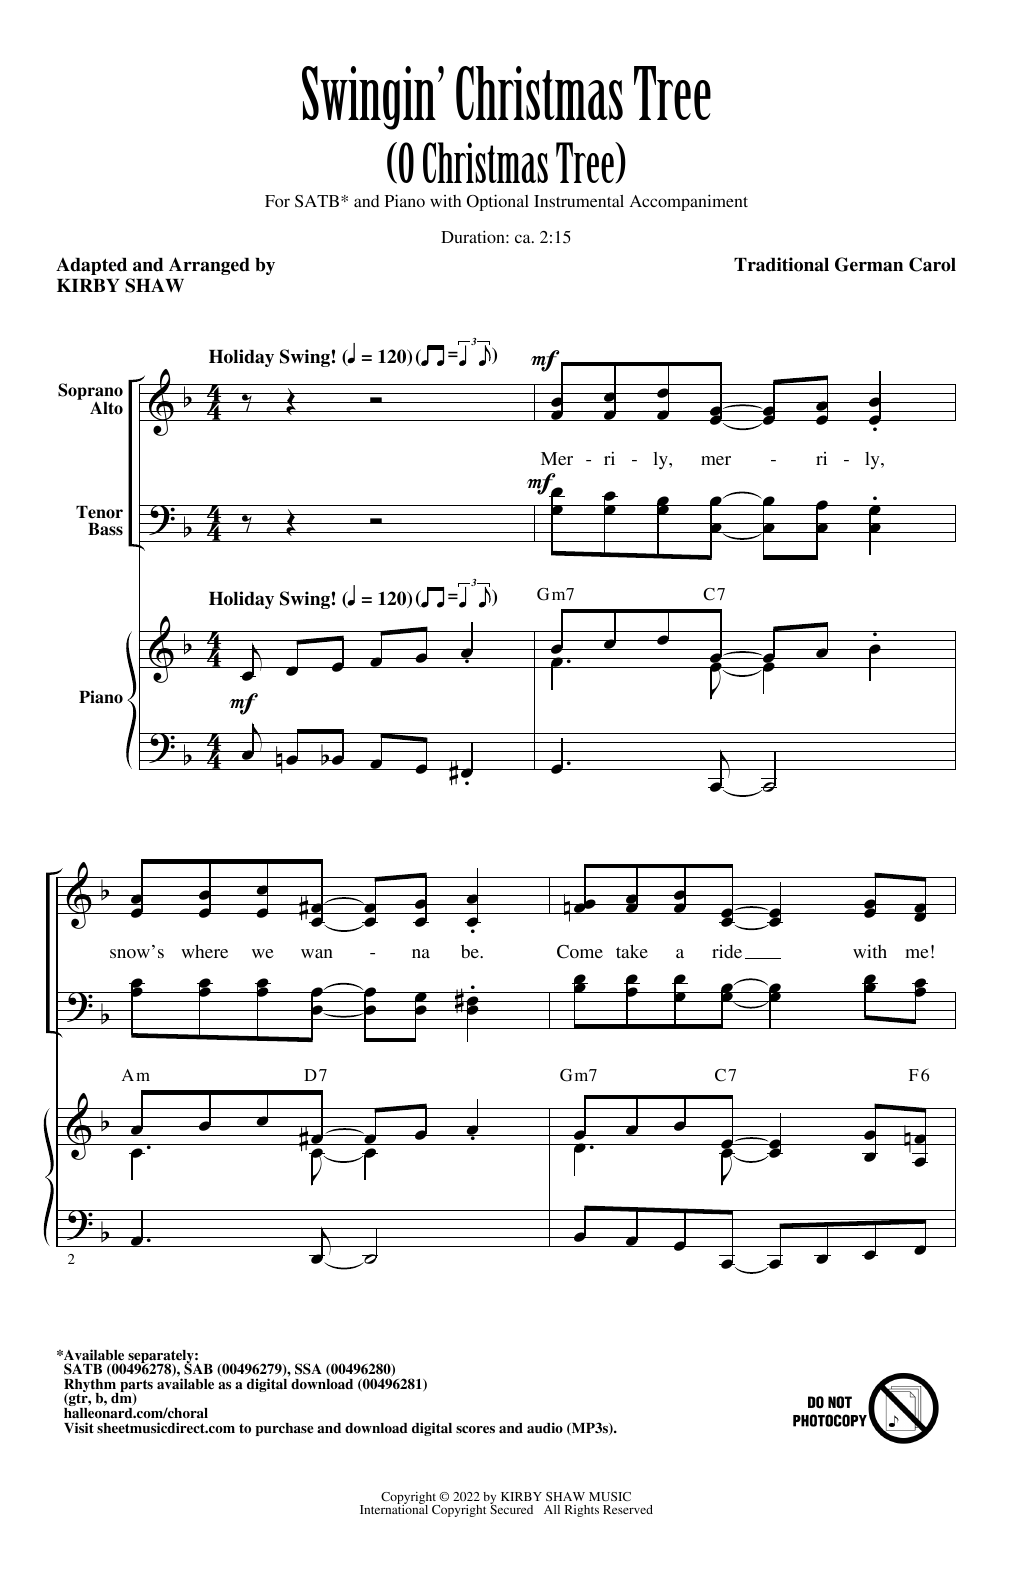 Download Traditional German Carol Swingin' Christmas Tree (O Christmas Tree) (arr. Kirby Shaw) Sheet Music and learn how to play SAB Choir PDF digital score in minutes